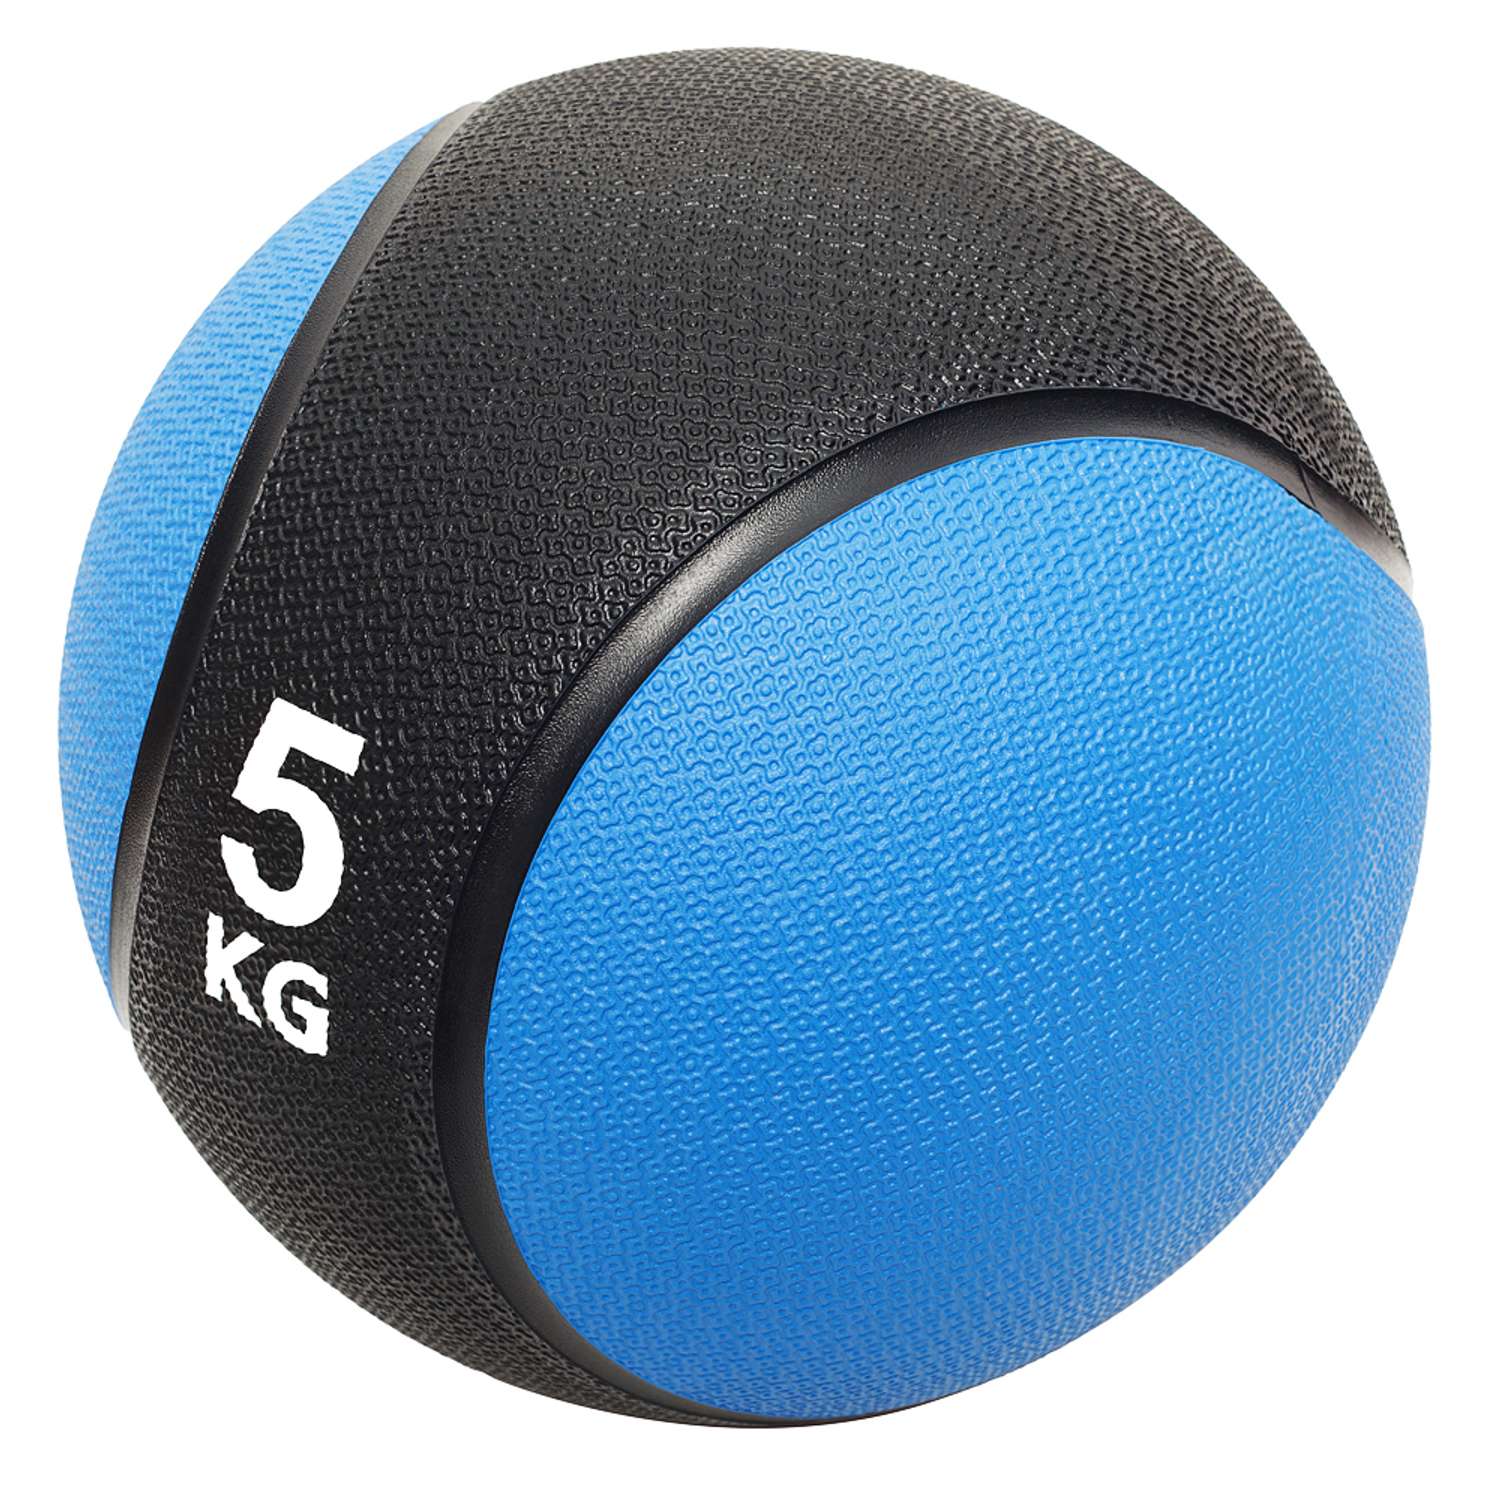 Медбол STRONG BODY медицинский мяч для фитнеса черно-синий 5 кг - фото 2